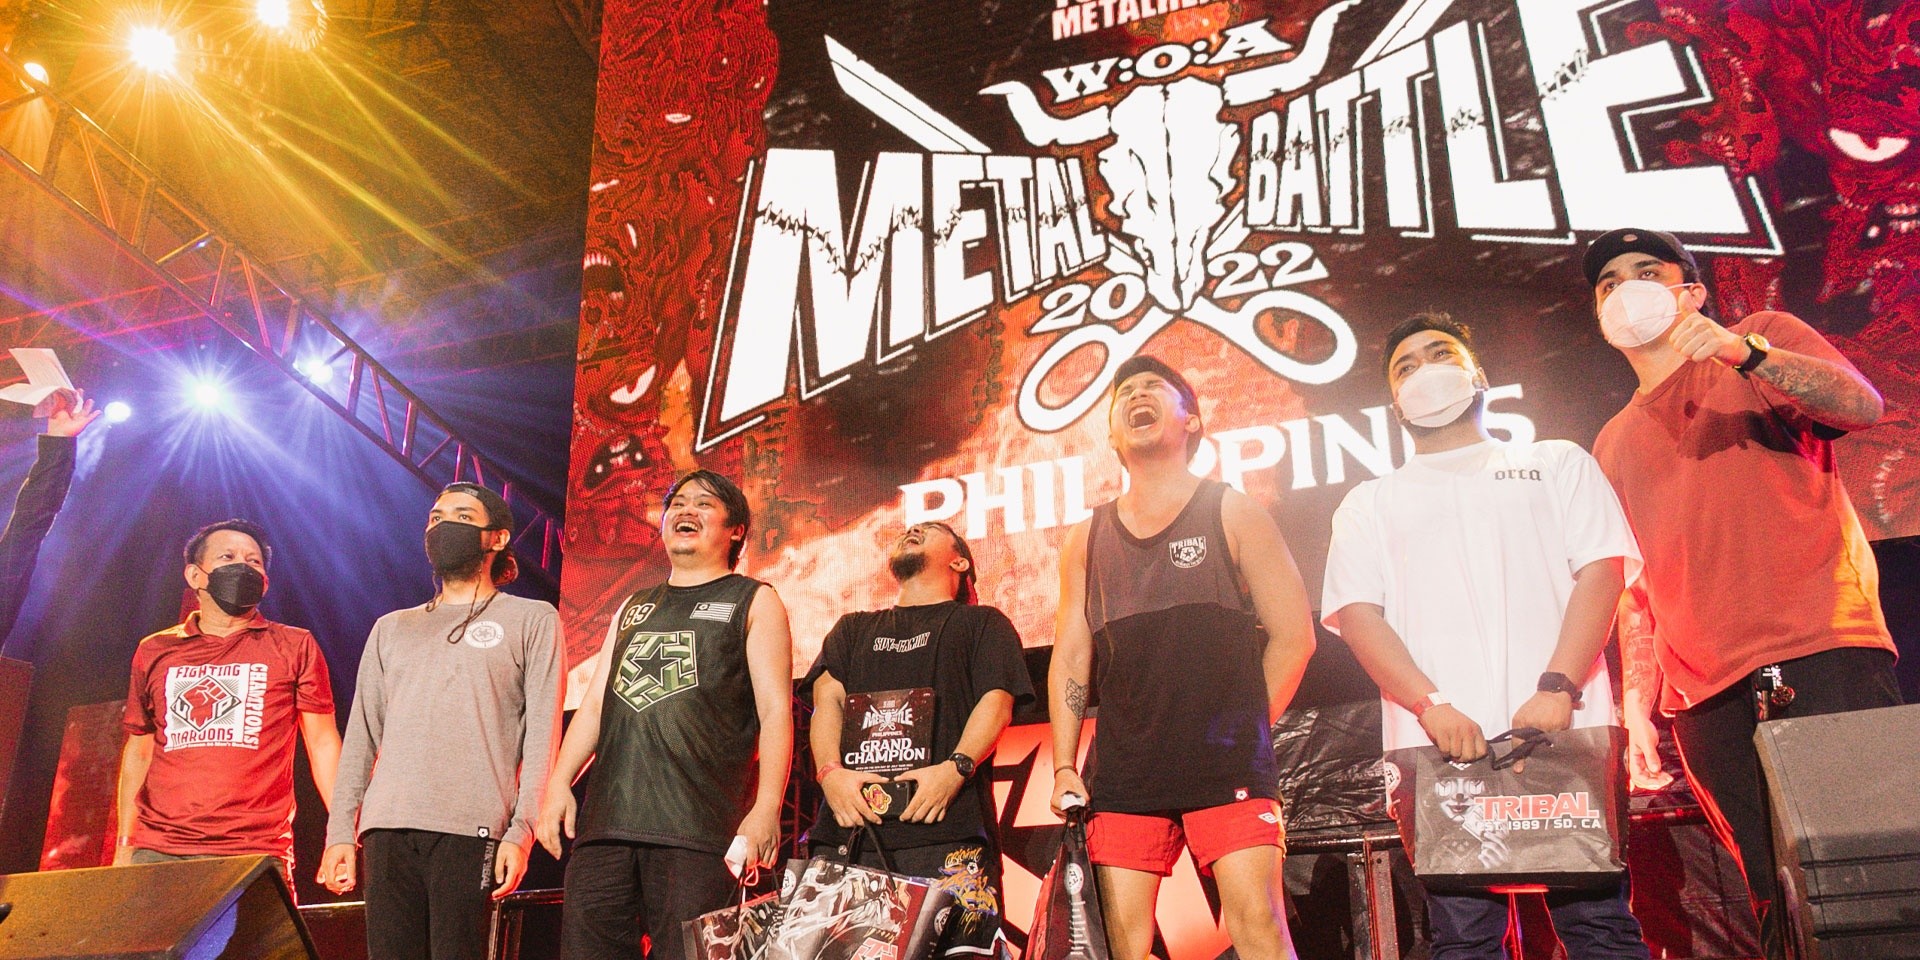 Heavy metal returns to Amoranto Stadium at Wacken Metal Battle – photo gallery